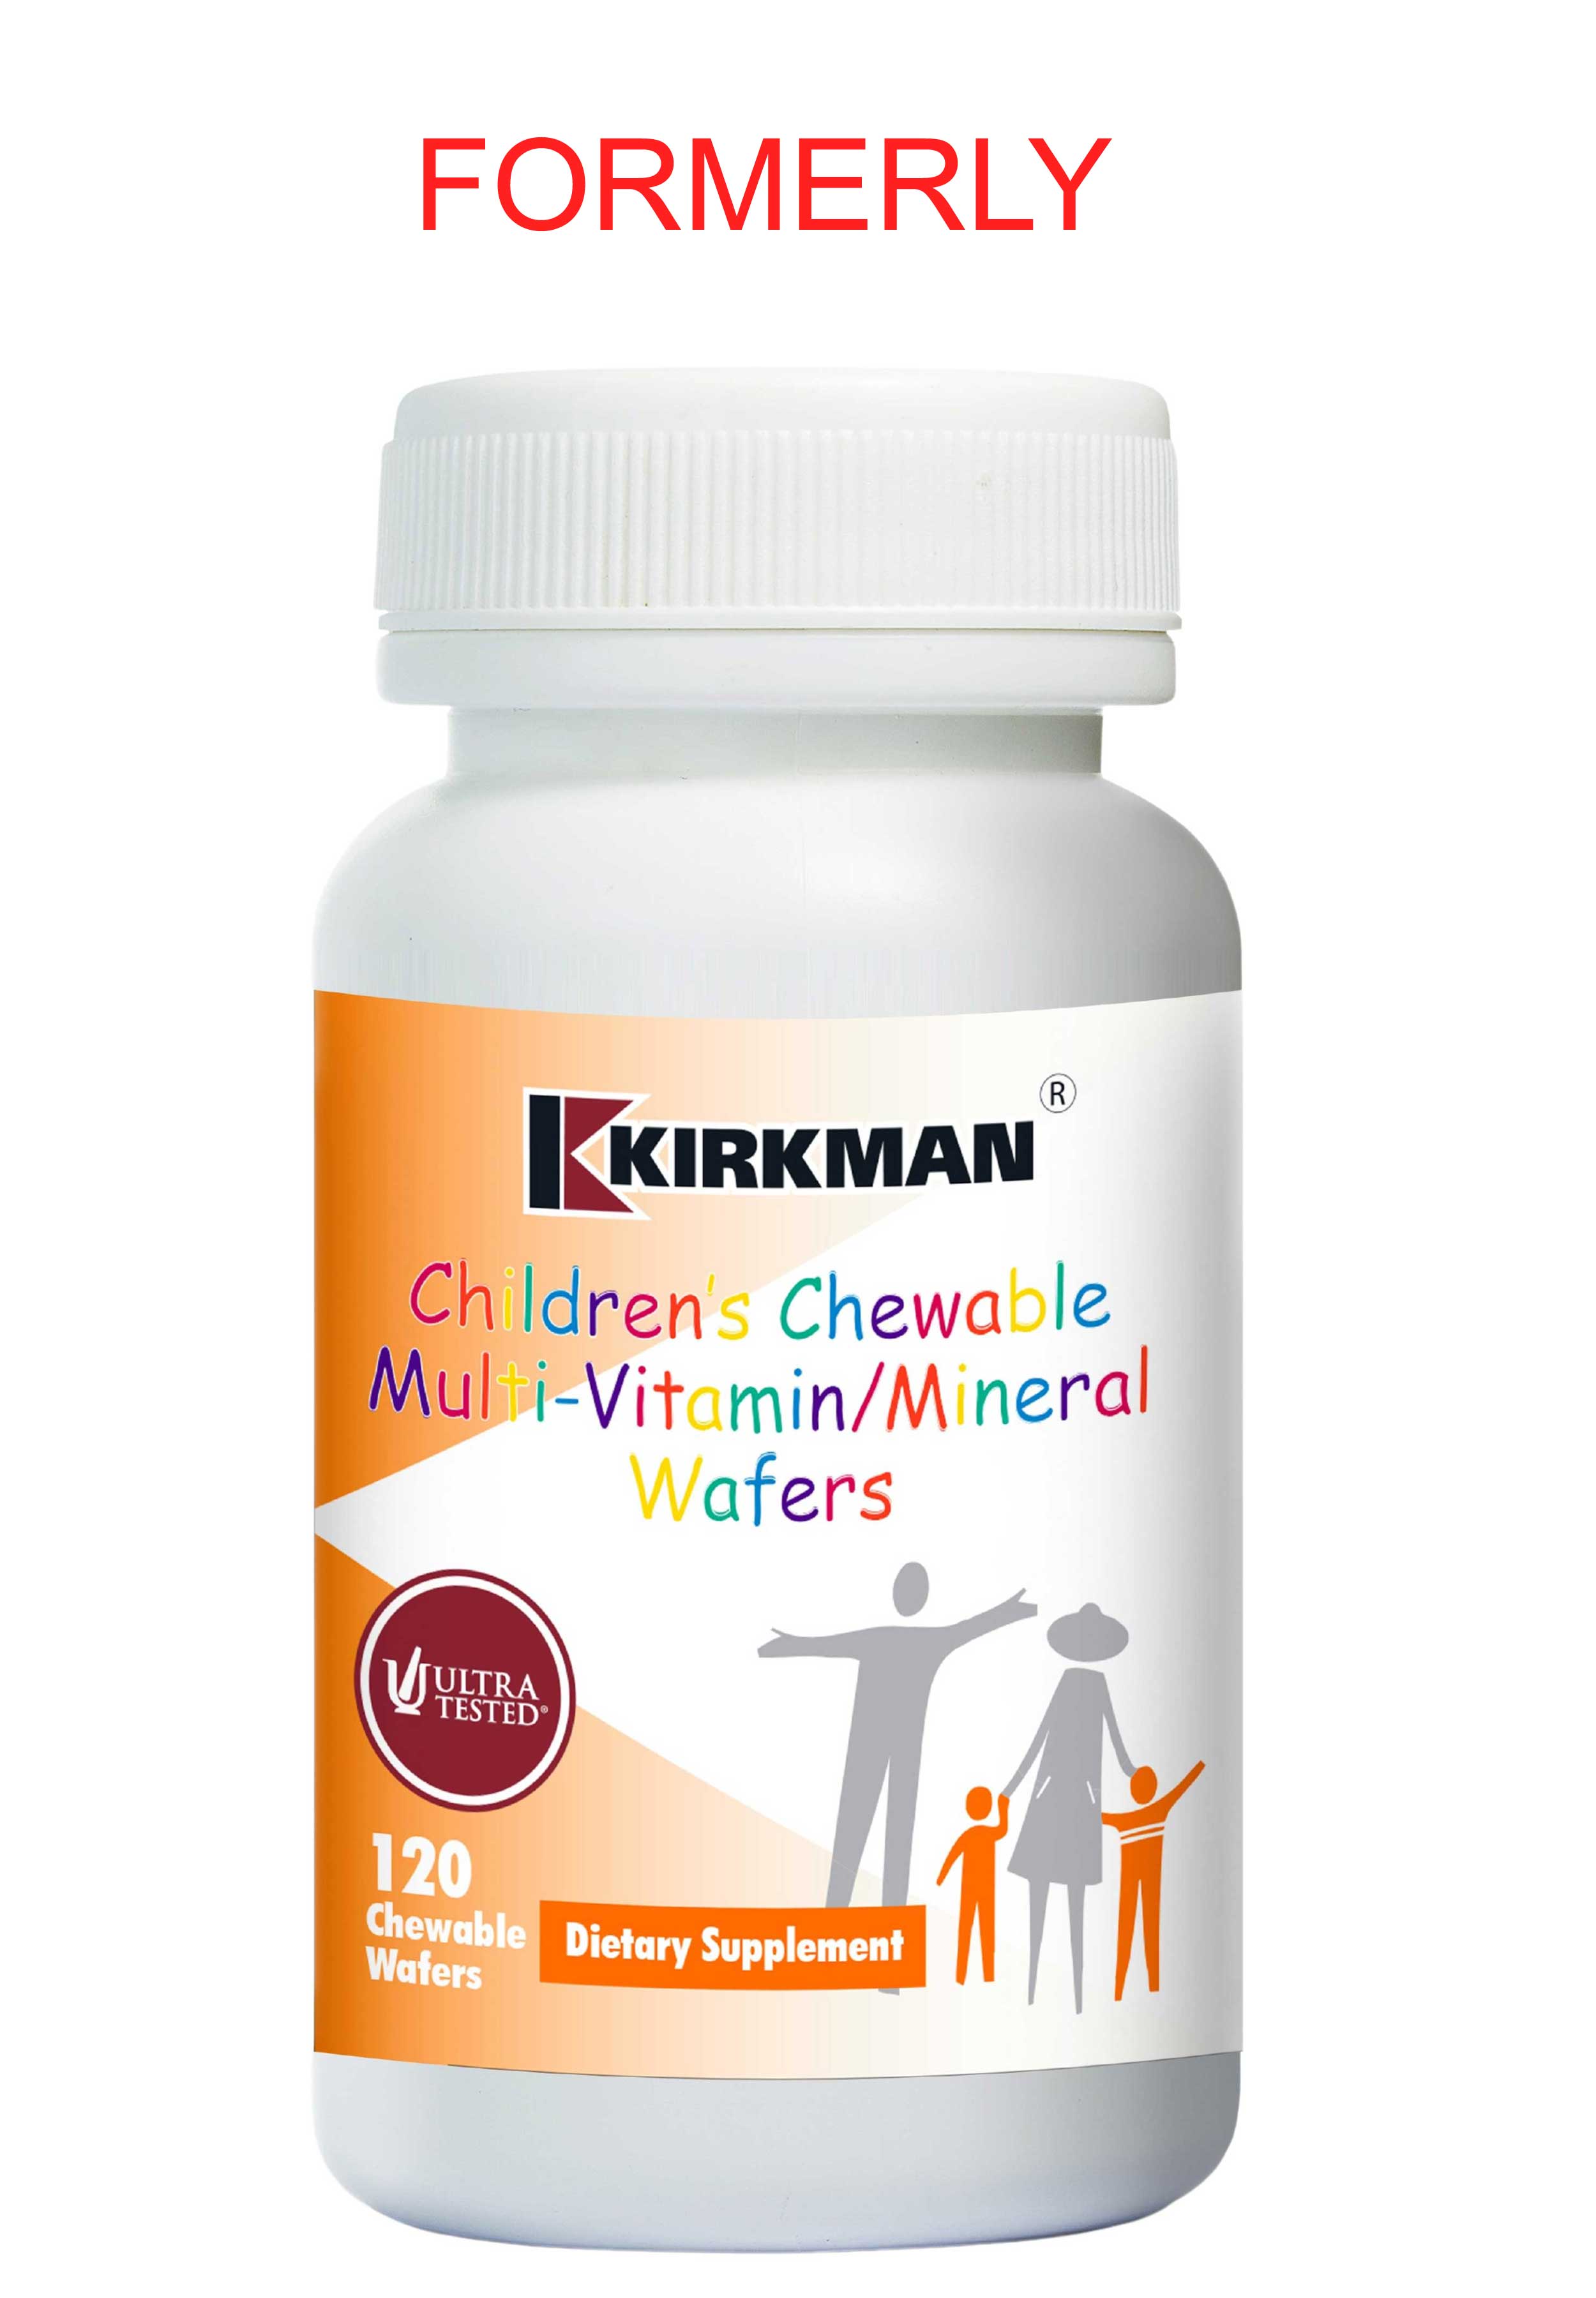 Kirkman Children's Chewable Multi-Vitamin/Mineral Tablets